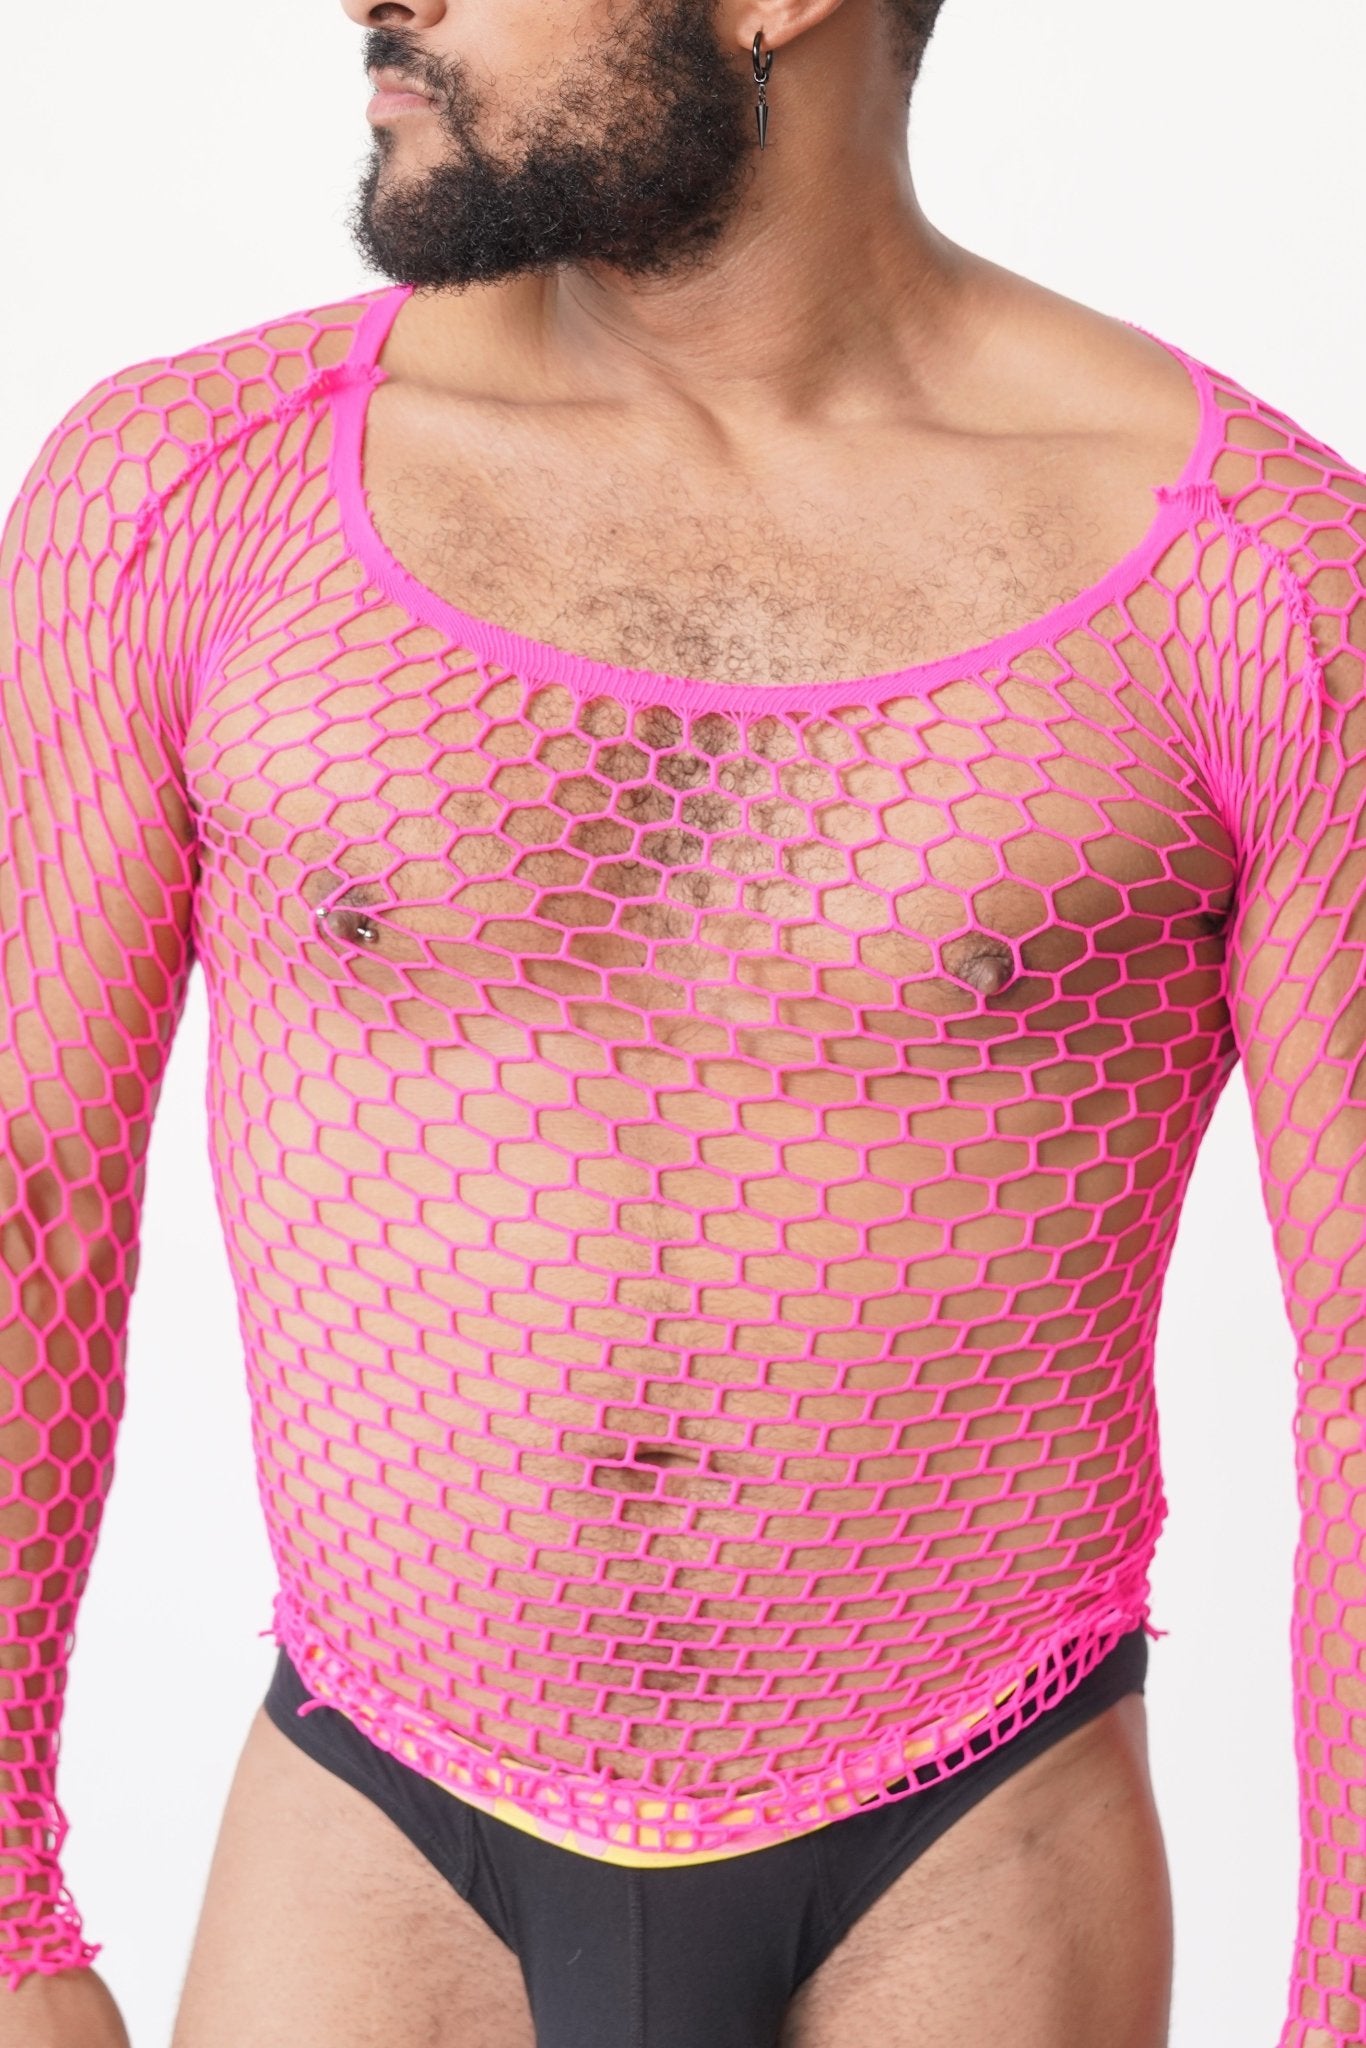 Hot Pink Fishnet Body Sock Shirt on model, fishnet top, Comfortable men's top